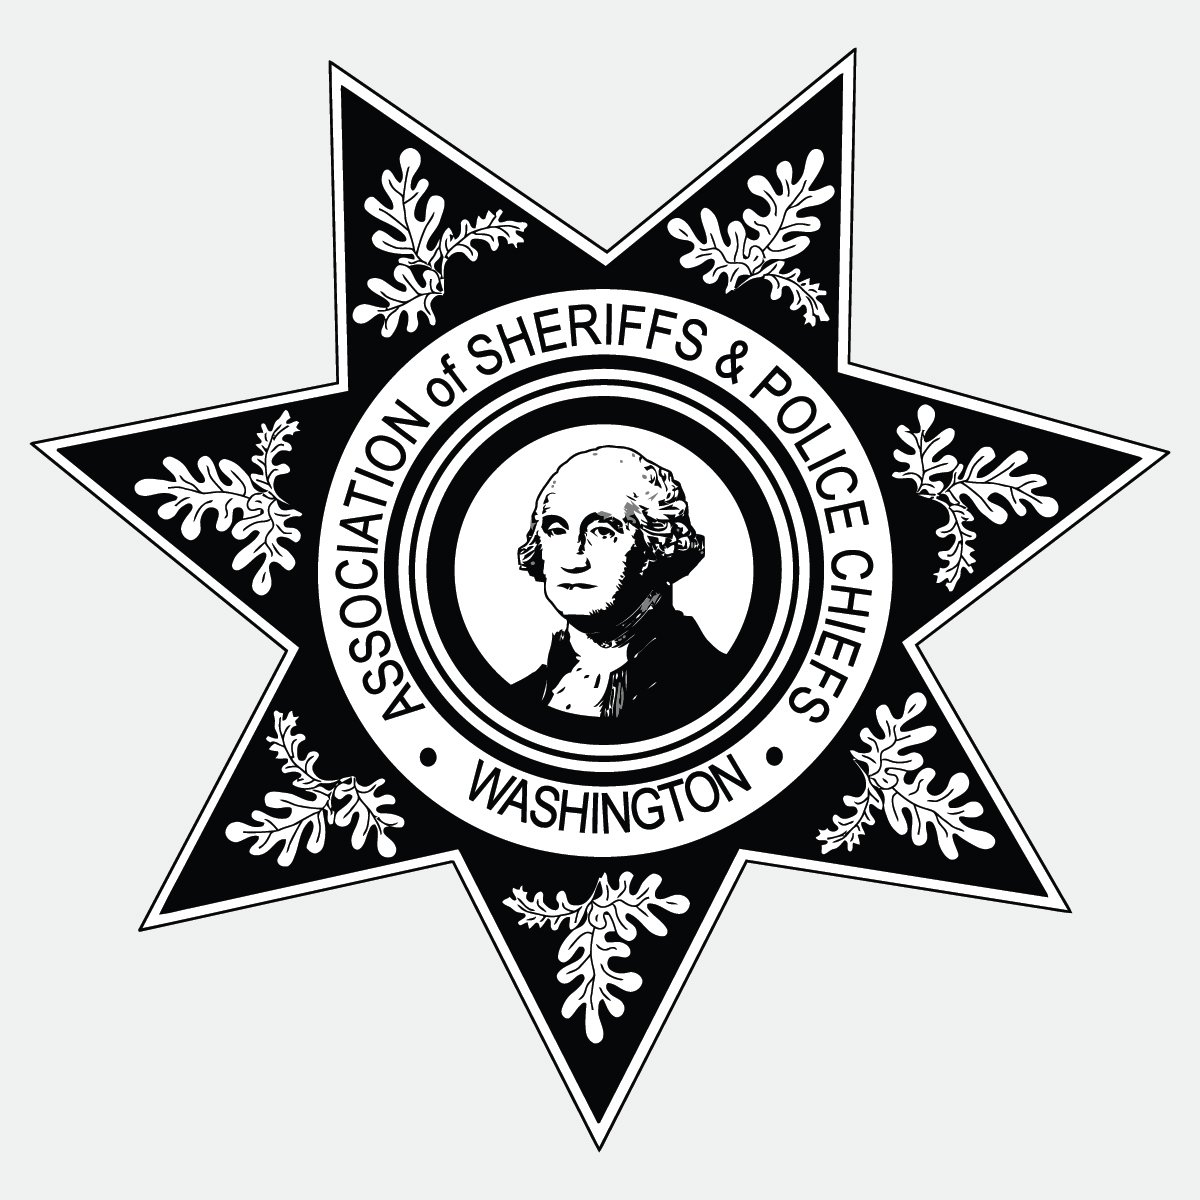 Association of sheriffs and police washington